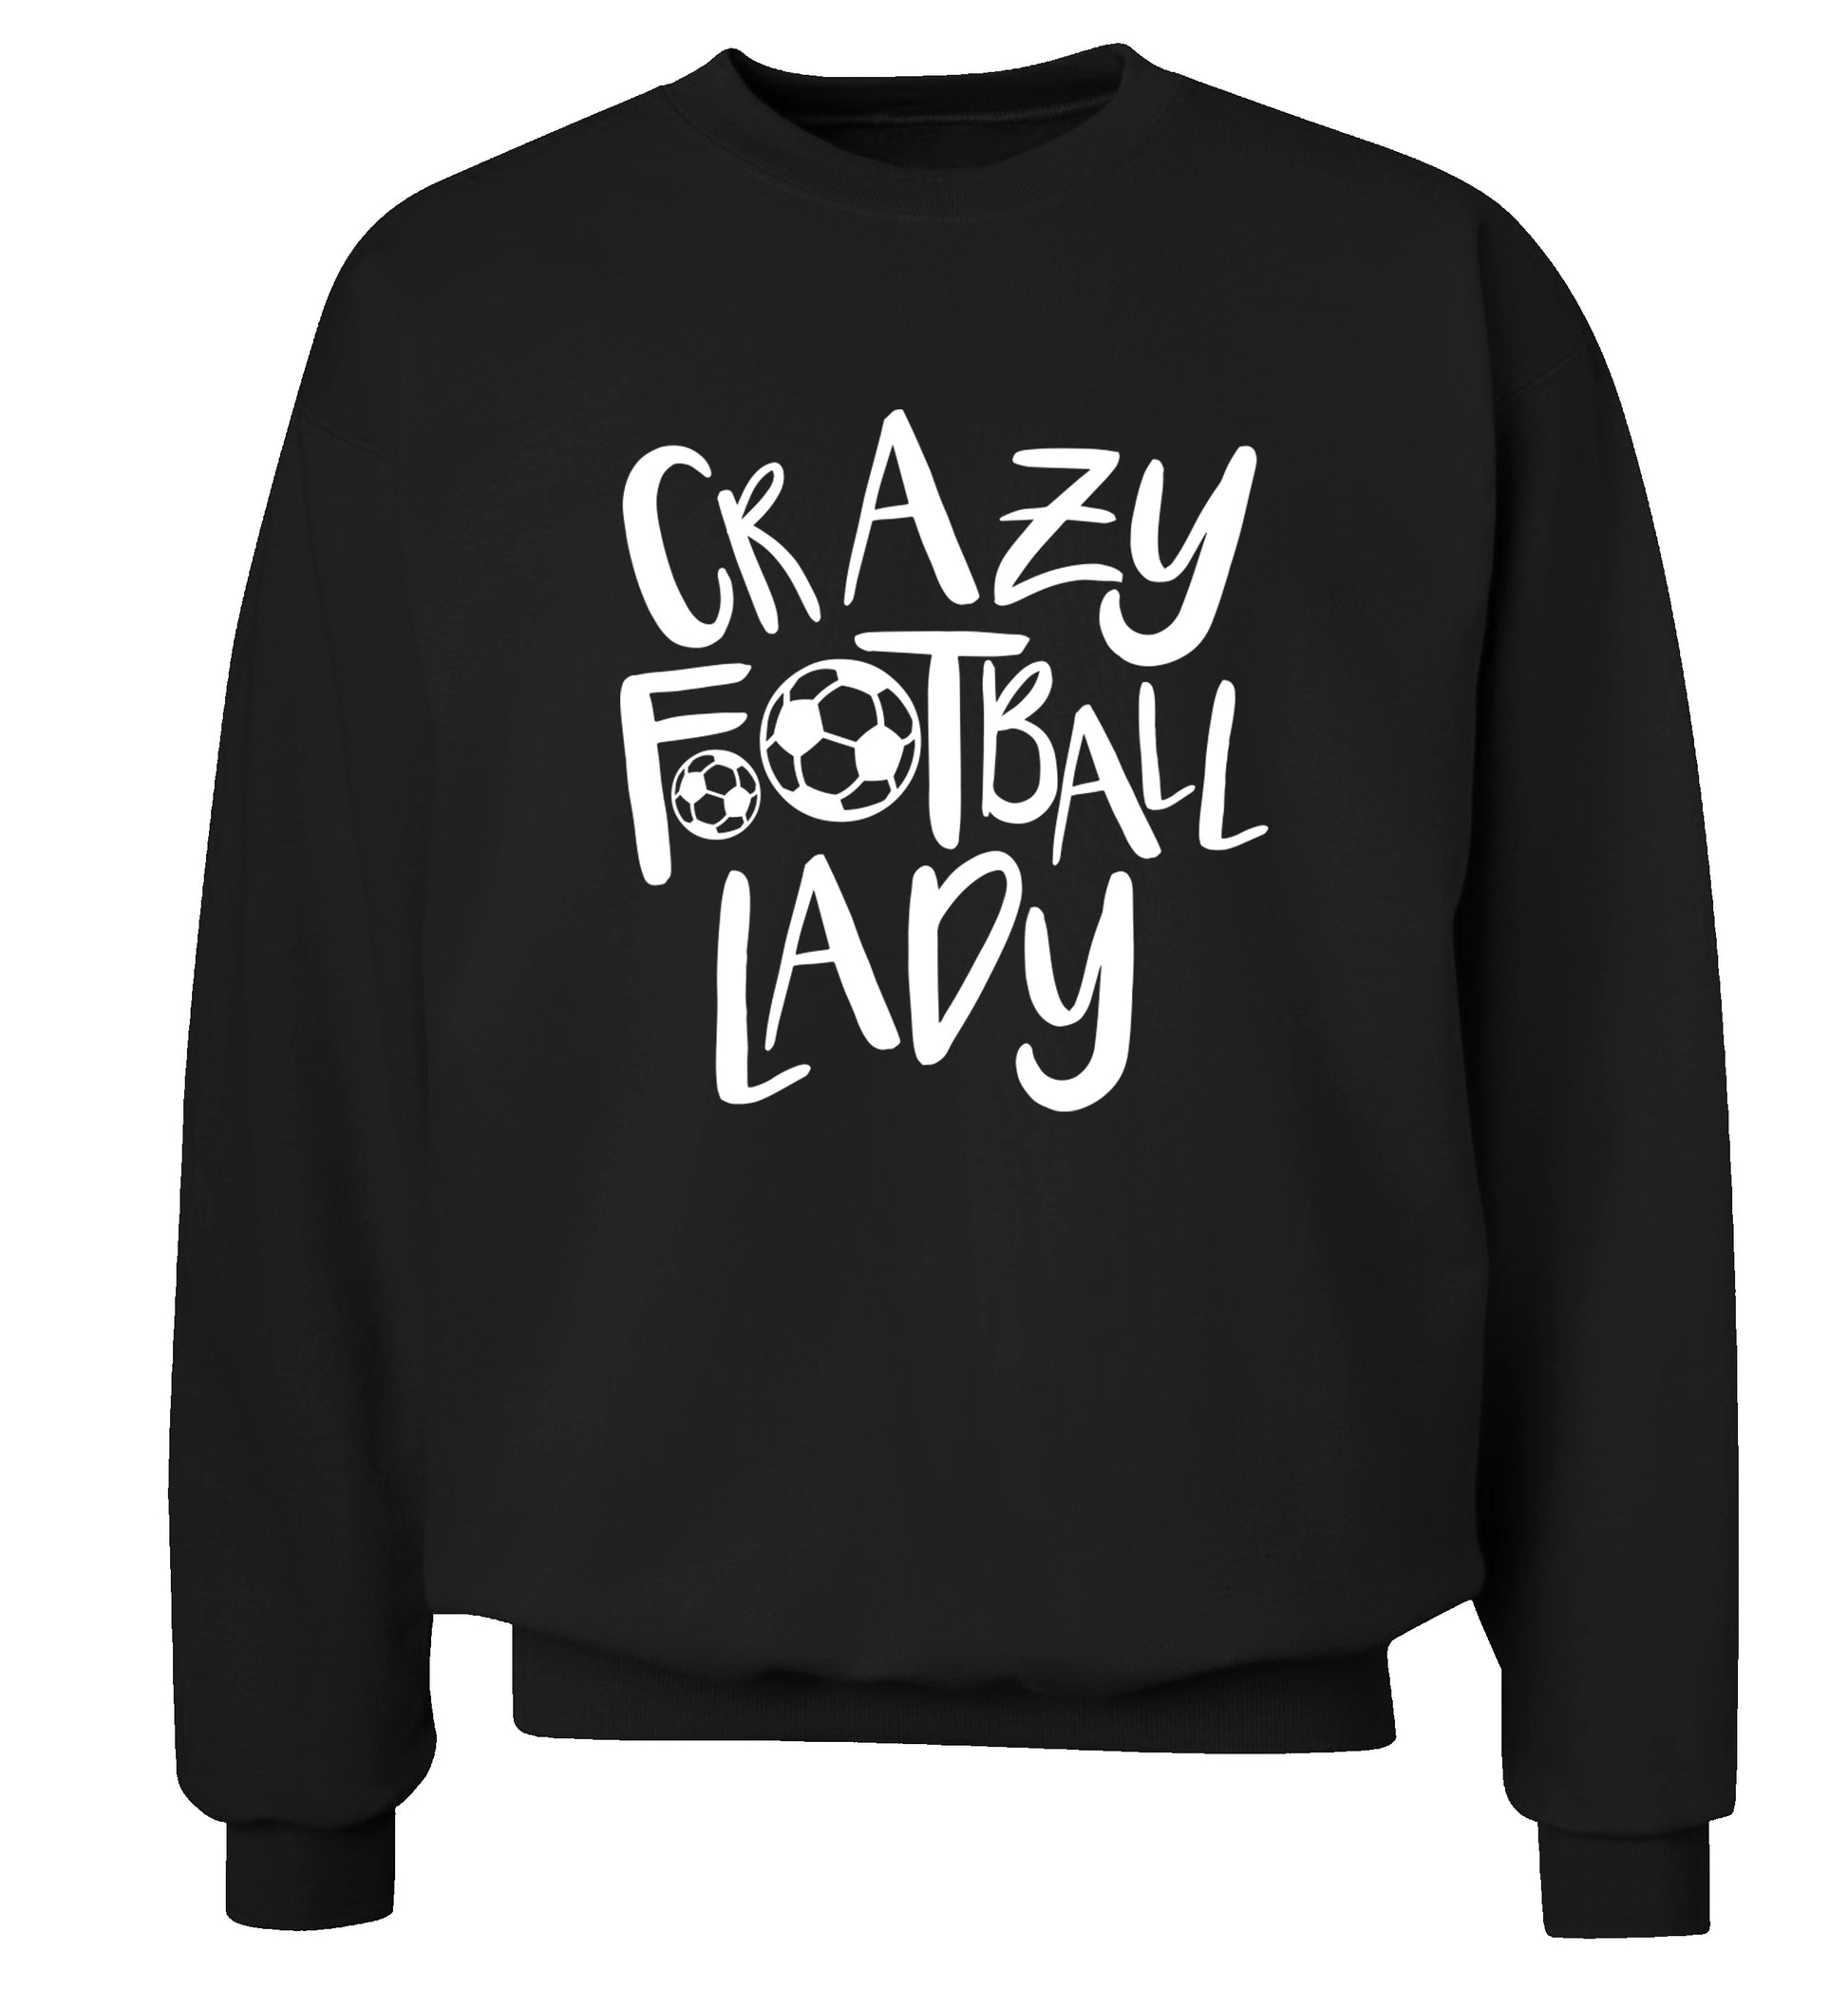 Crazy football lady Adult's unisexblack Sweater 2XL